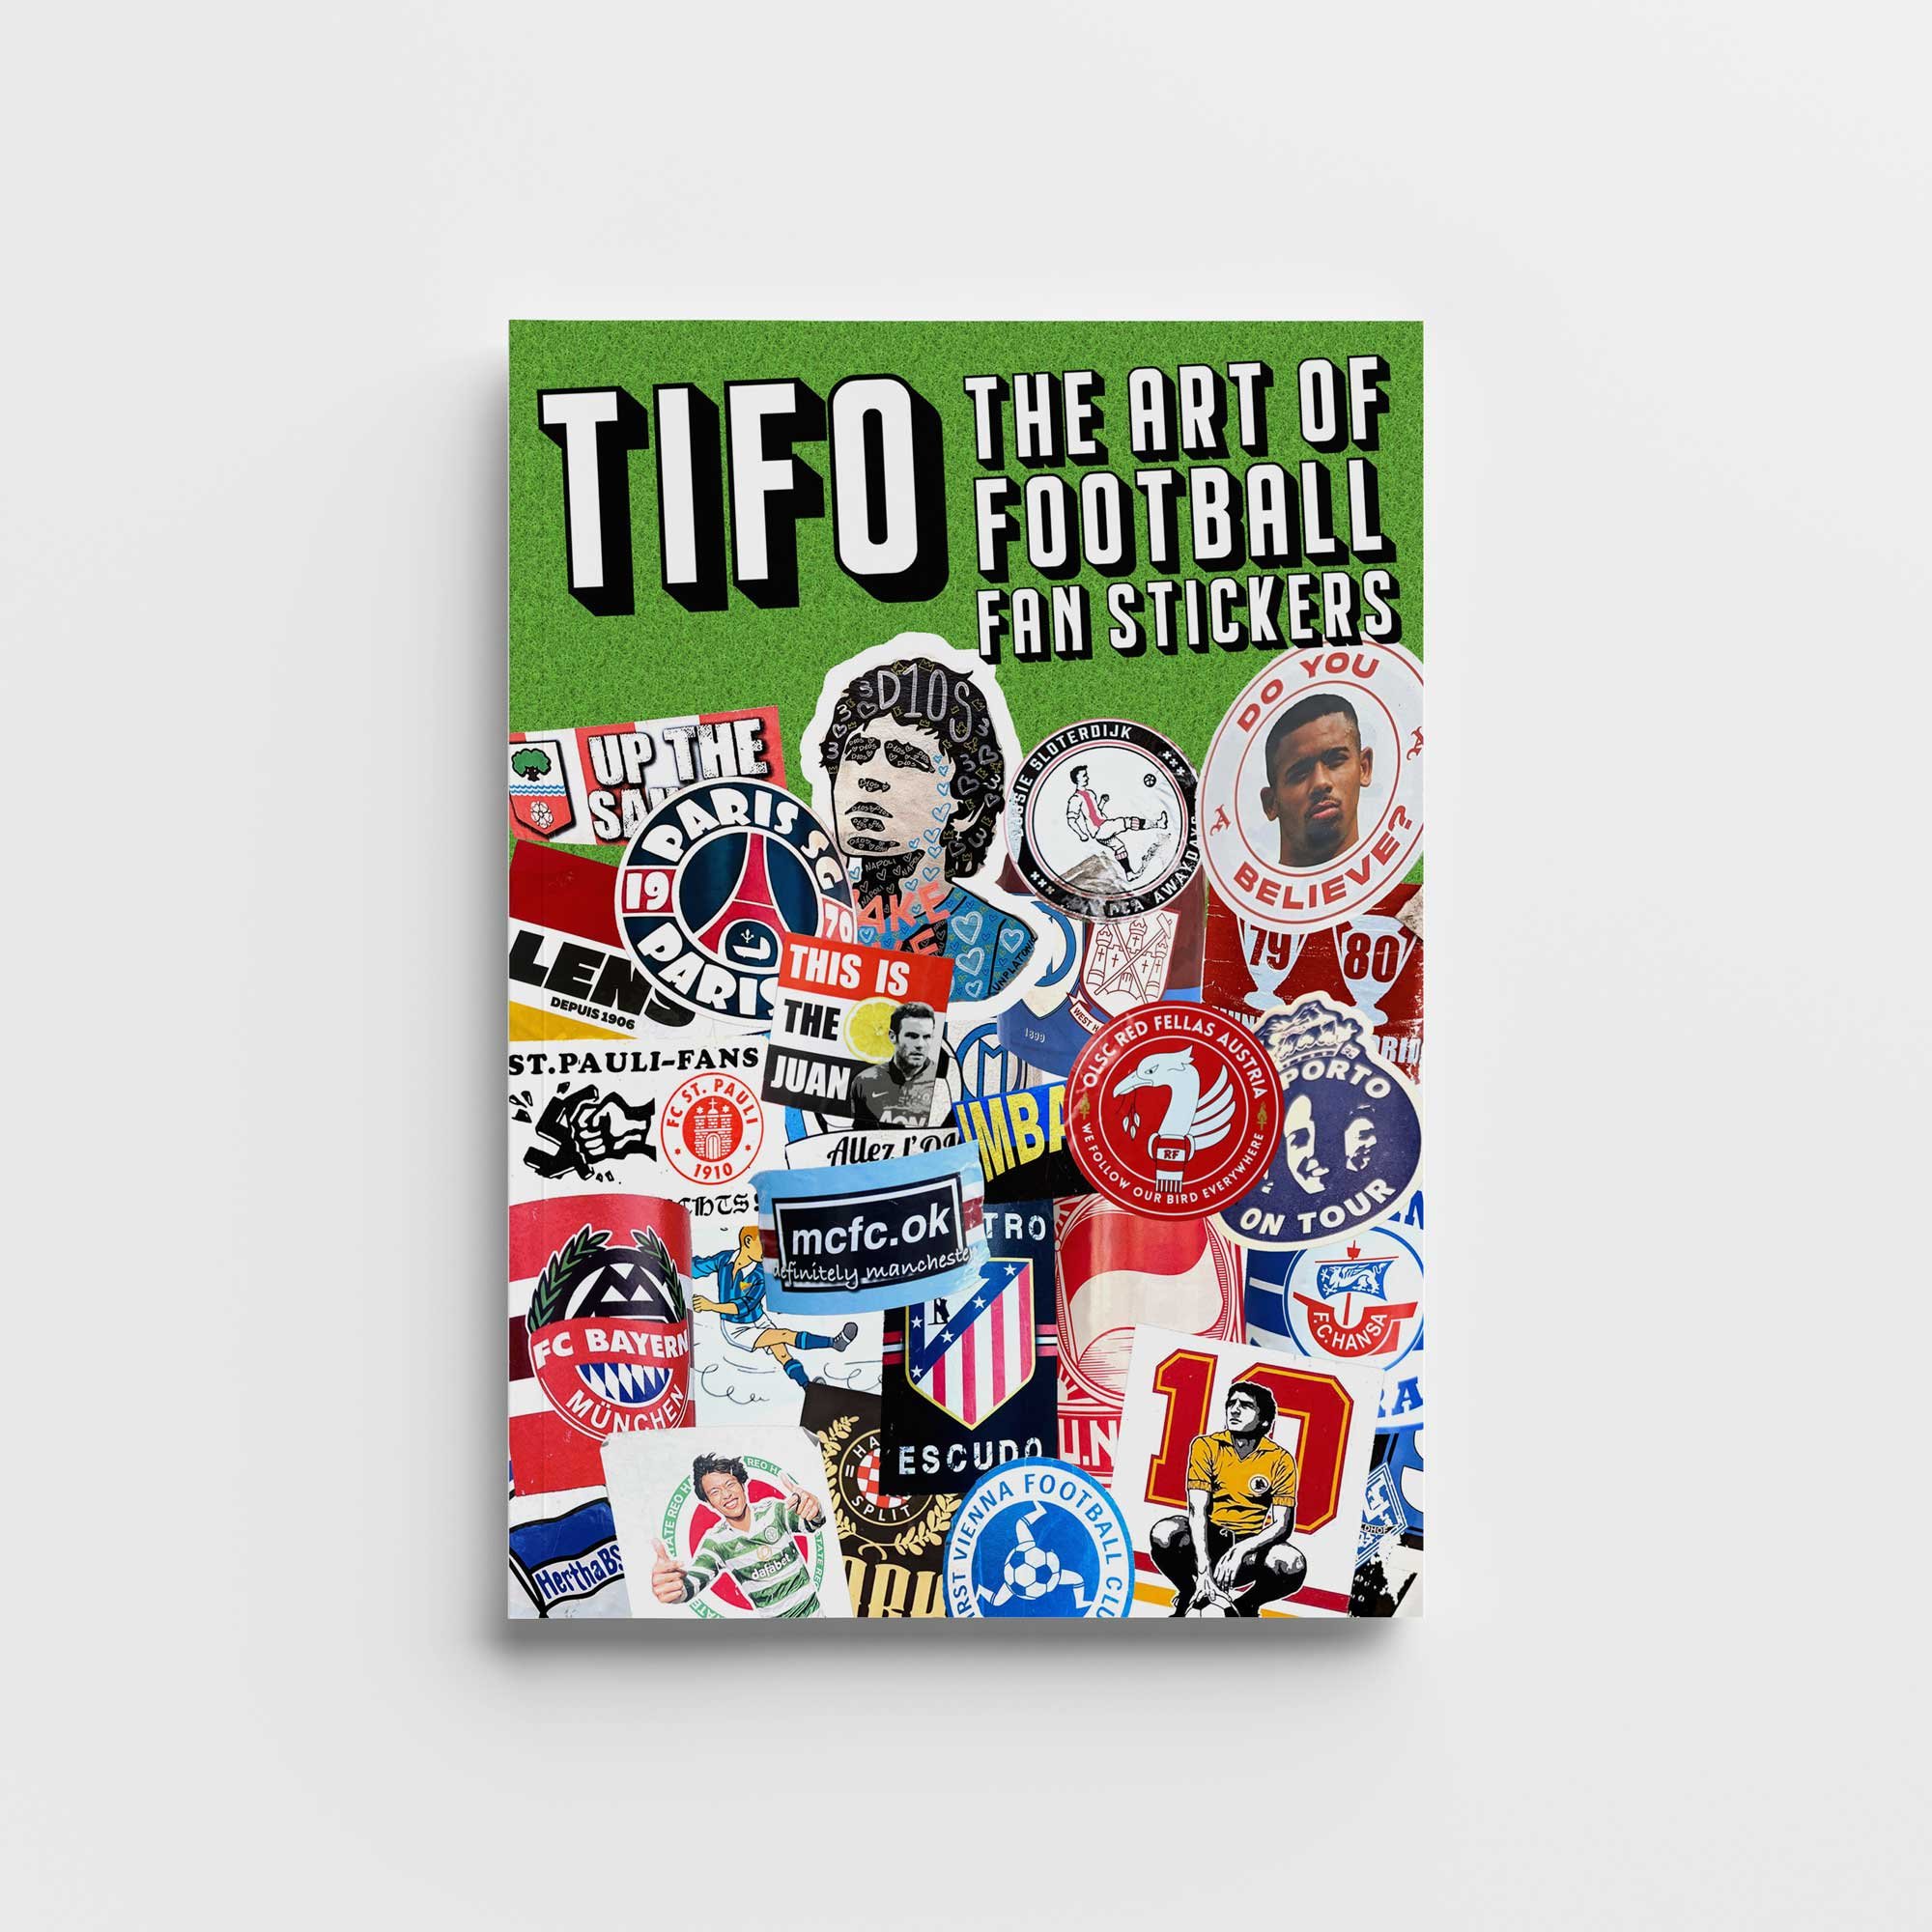 Tifo-Cover.jpg